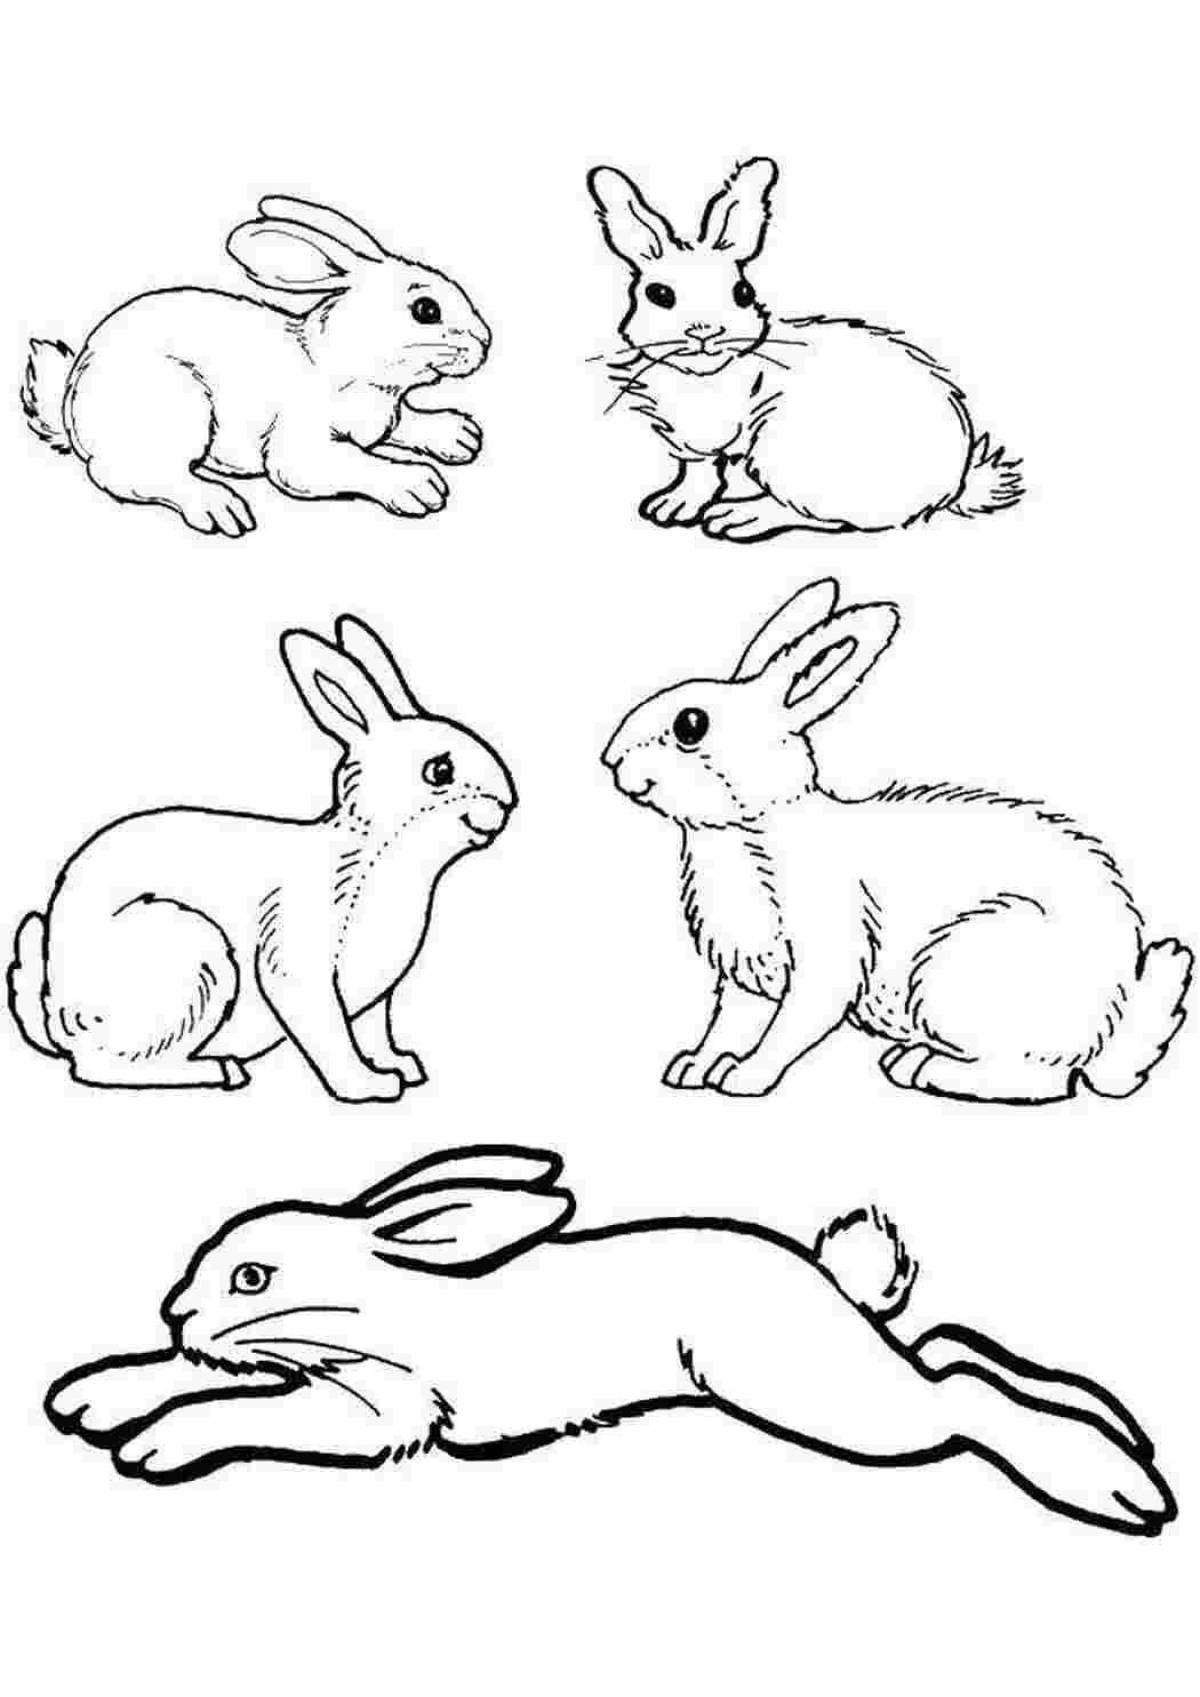 Little rabbits #12